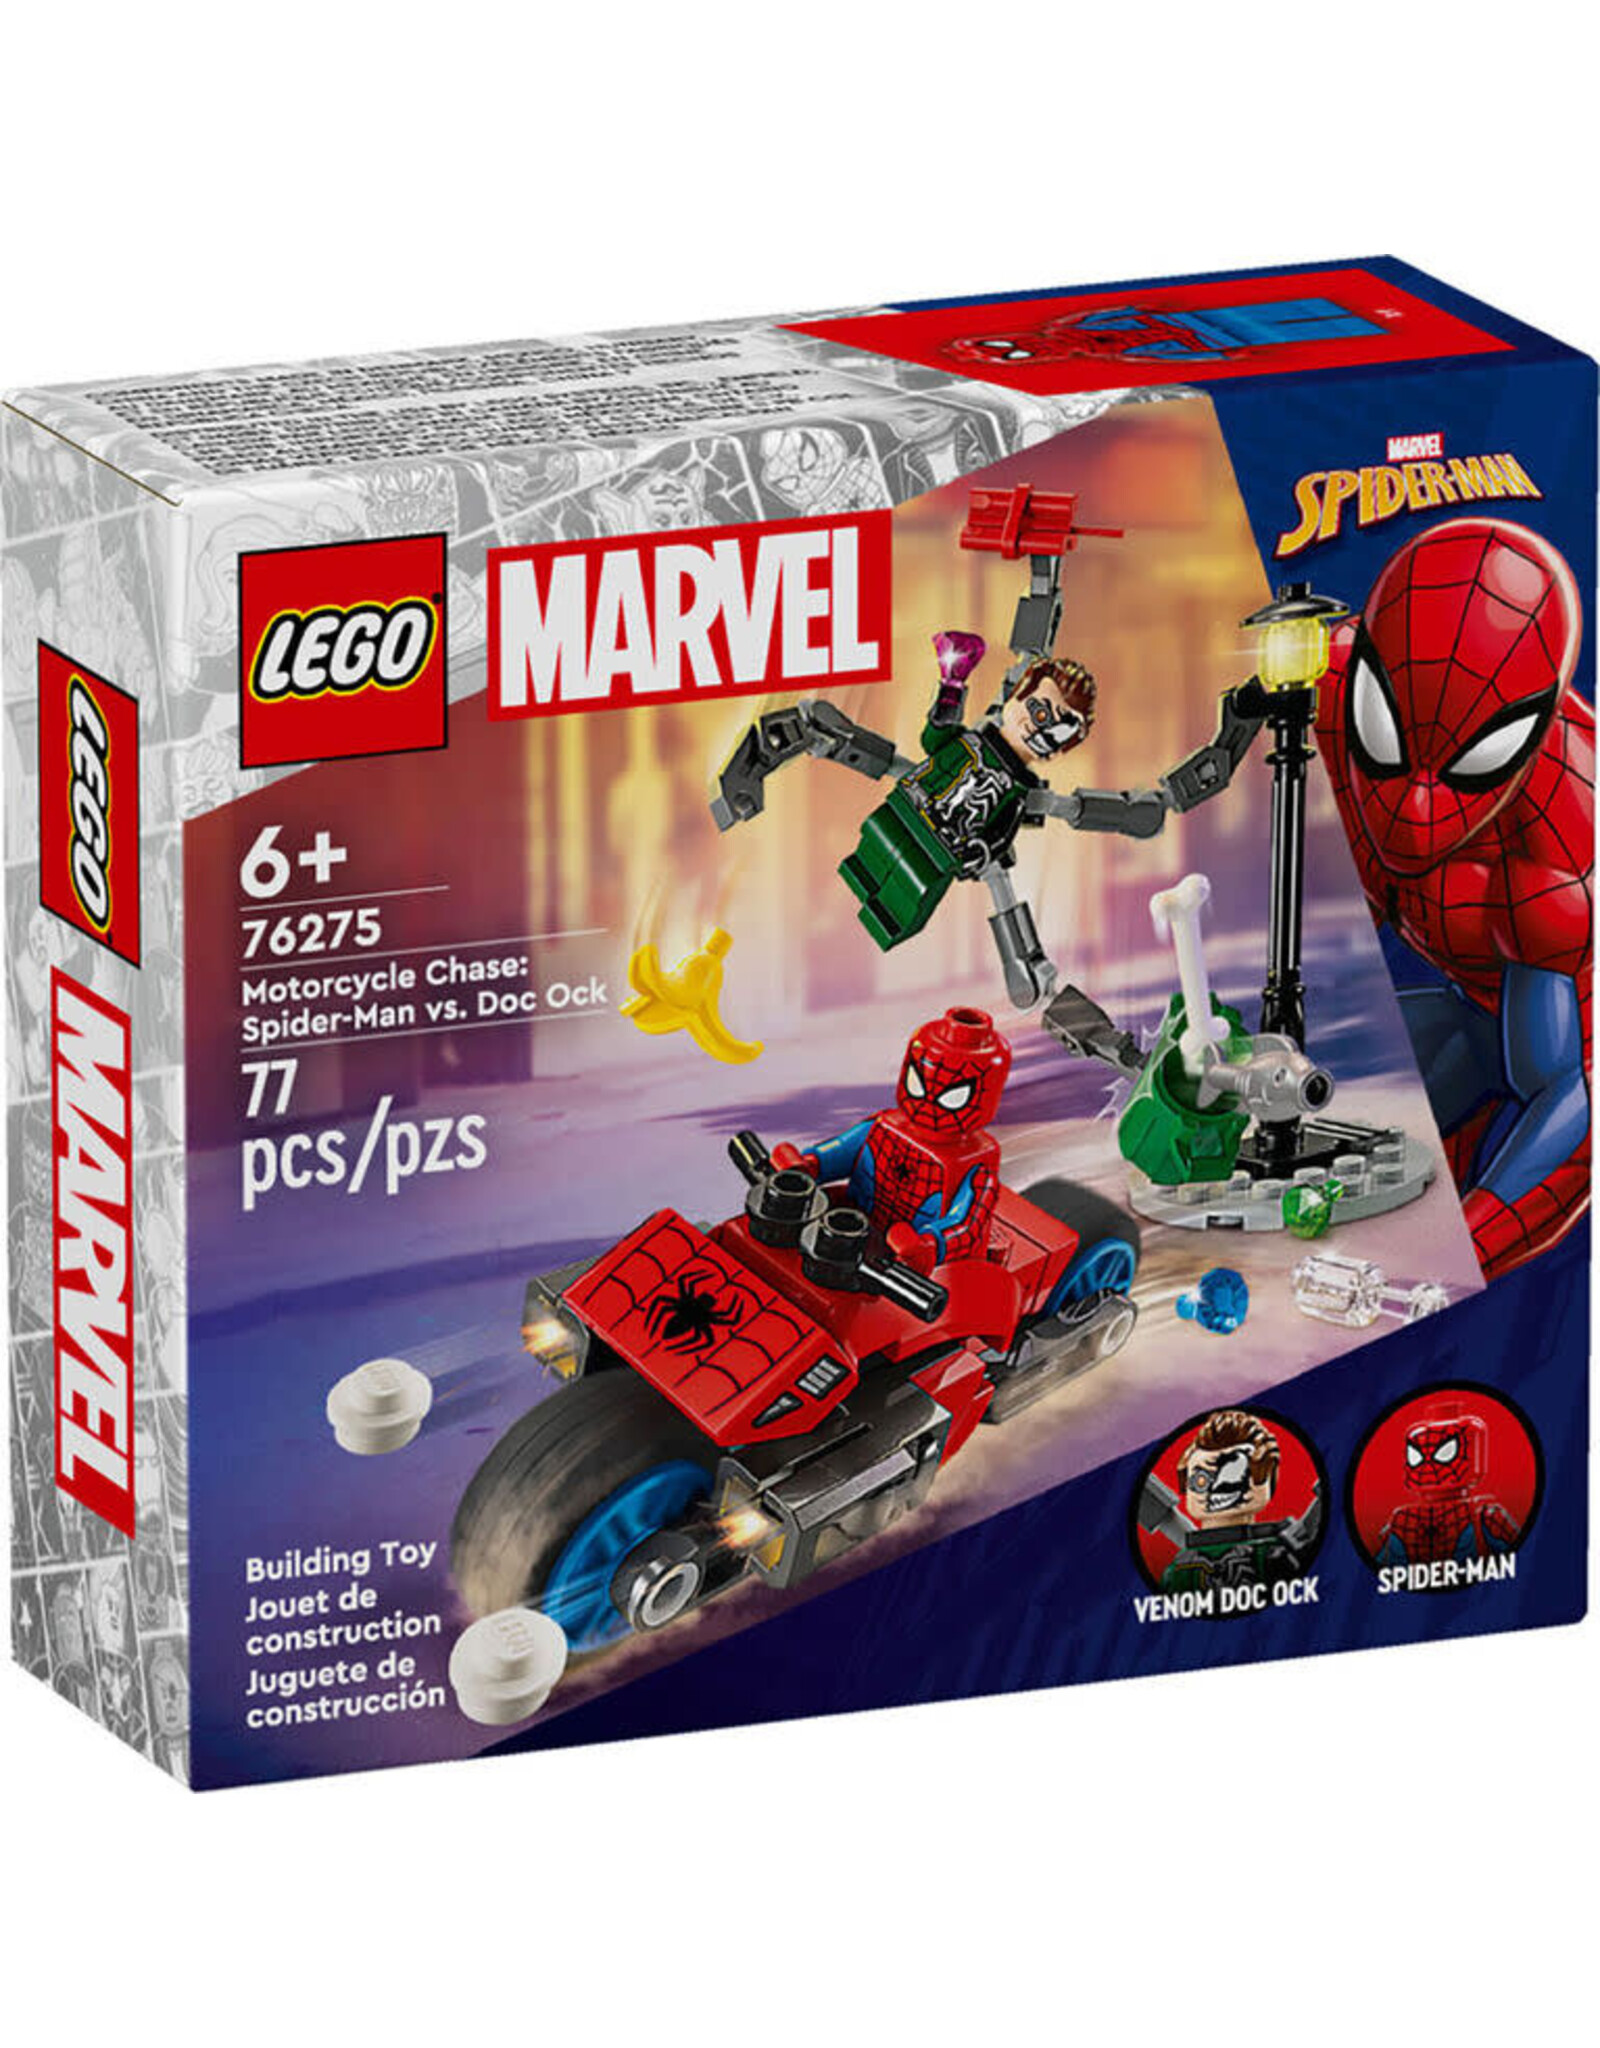 Lego Motorcycle Chase: Spider-Man vs. Doc Ock